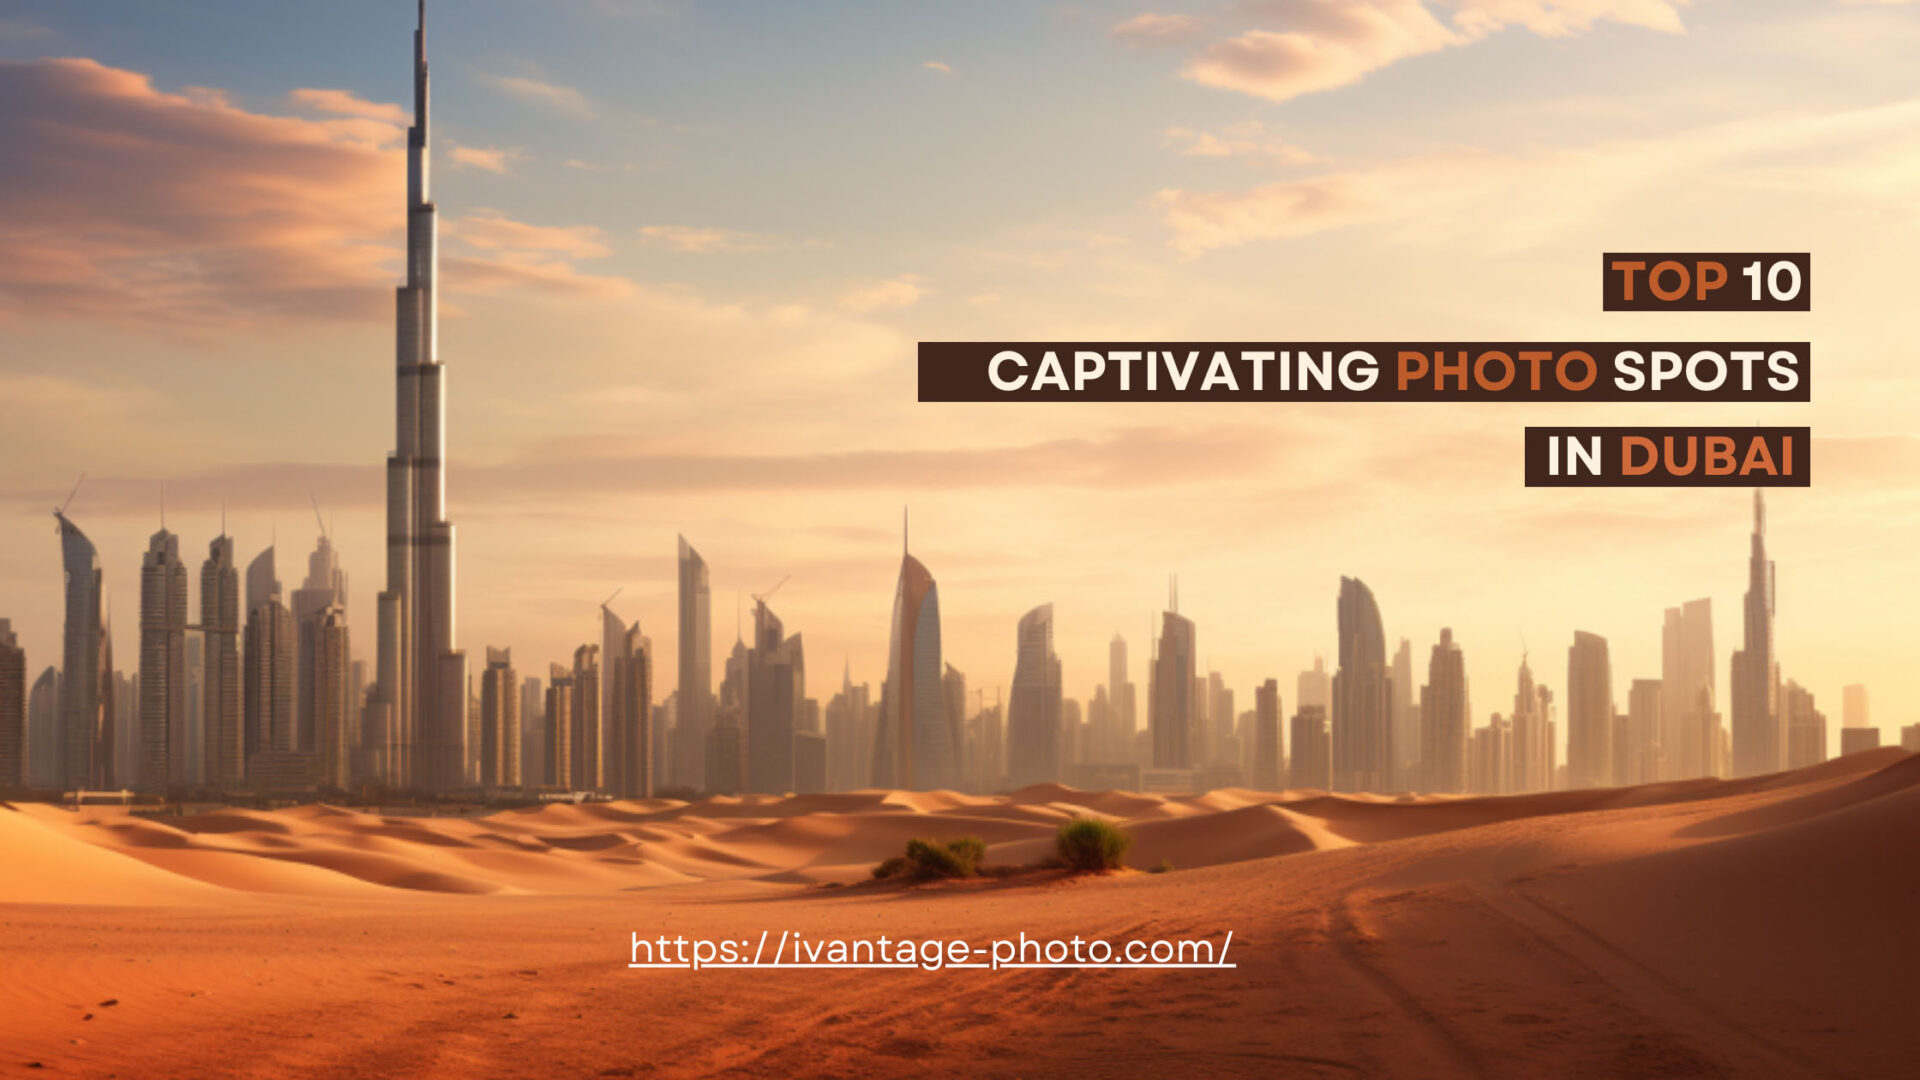 Panoramic view of Dubai's iconic skyline emerging from the vast desert sands, captured by freelance photographer Ivan Cherkashin.